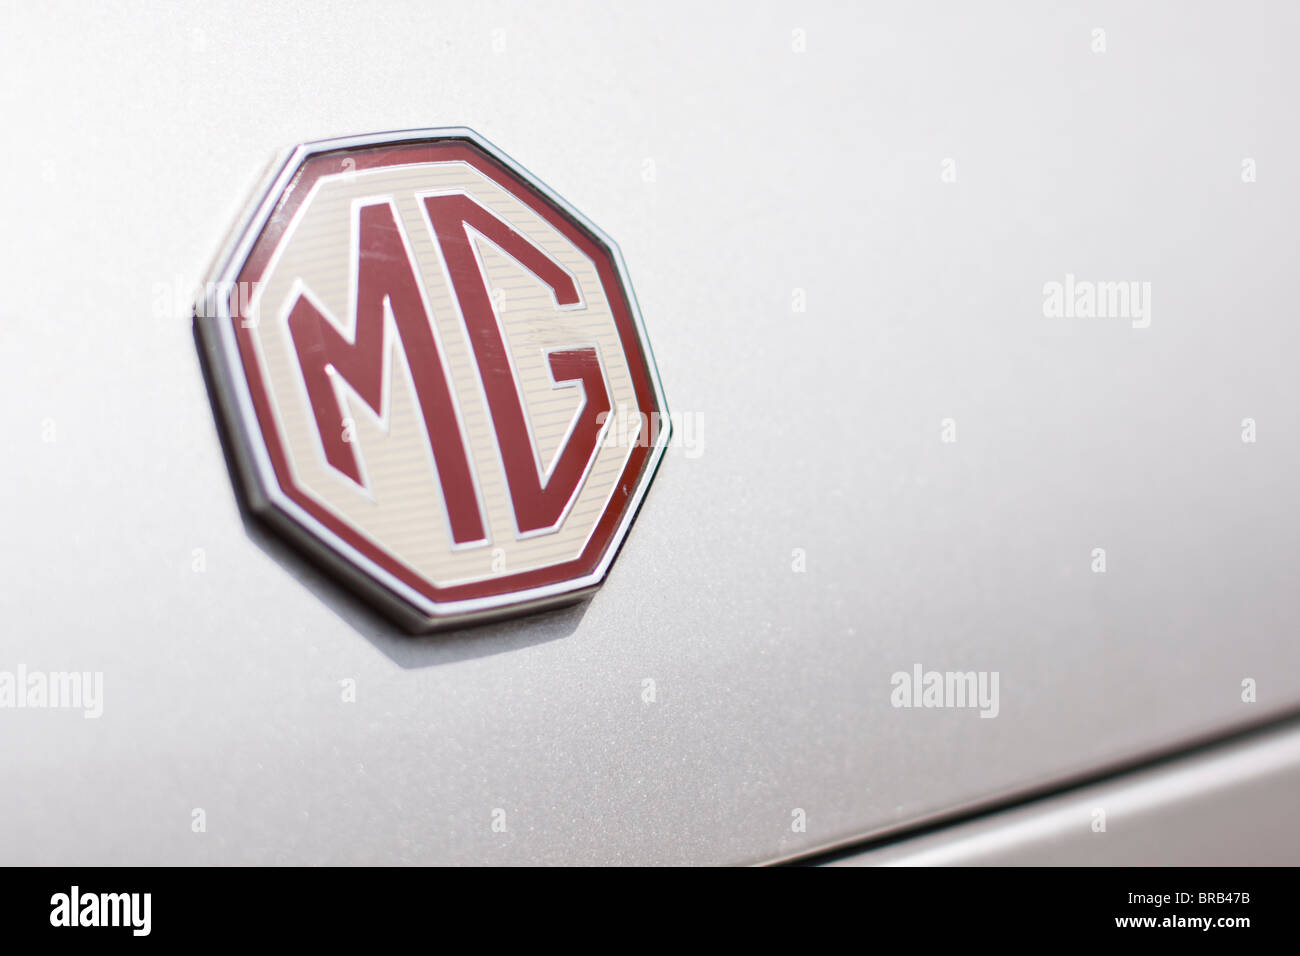 MG Car Badge on MGF Stock Photo